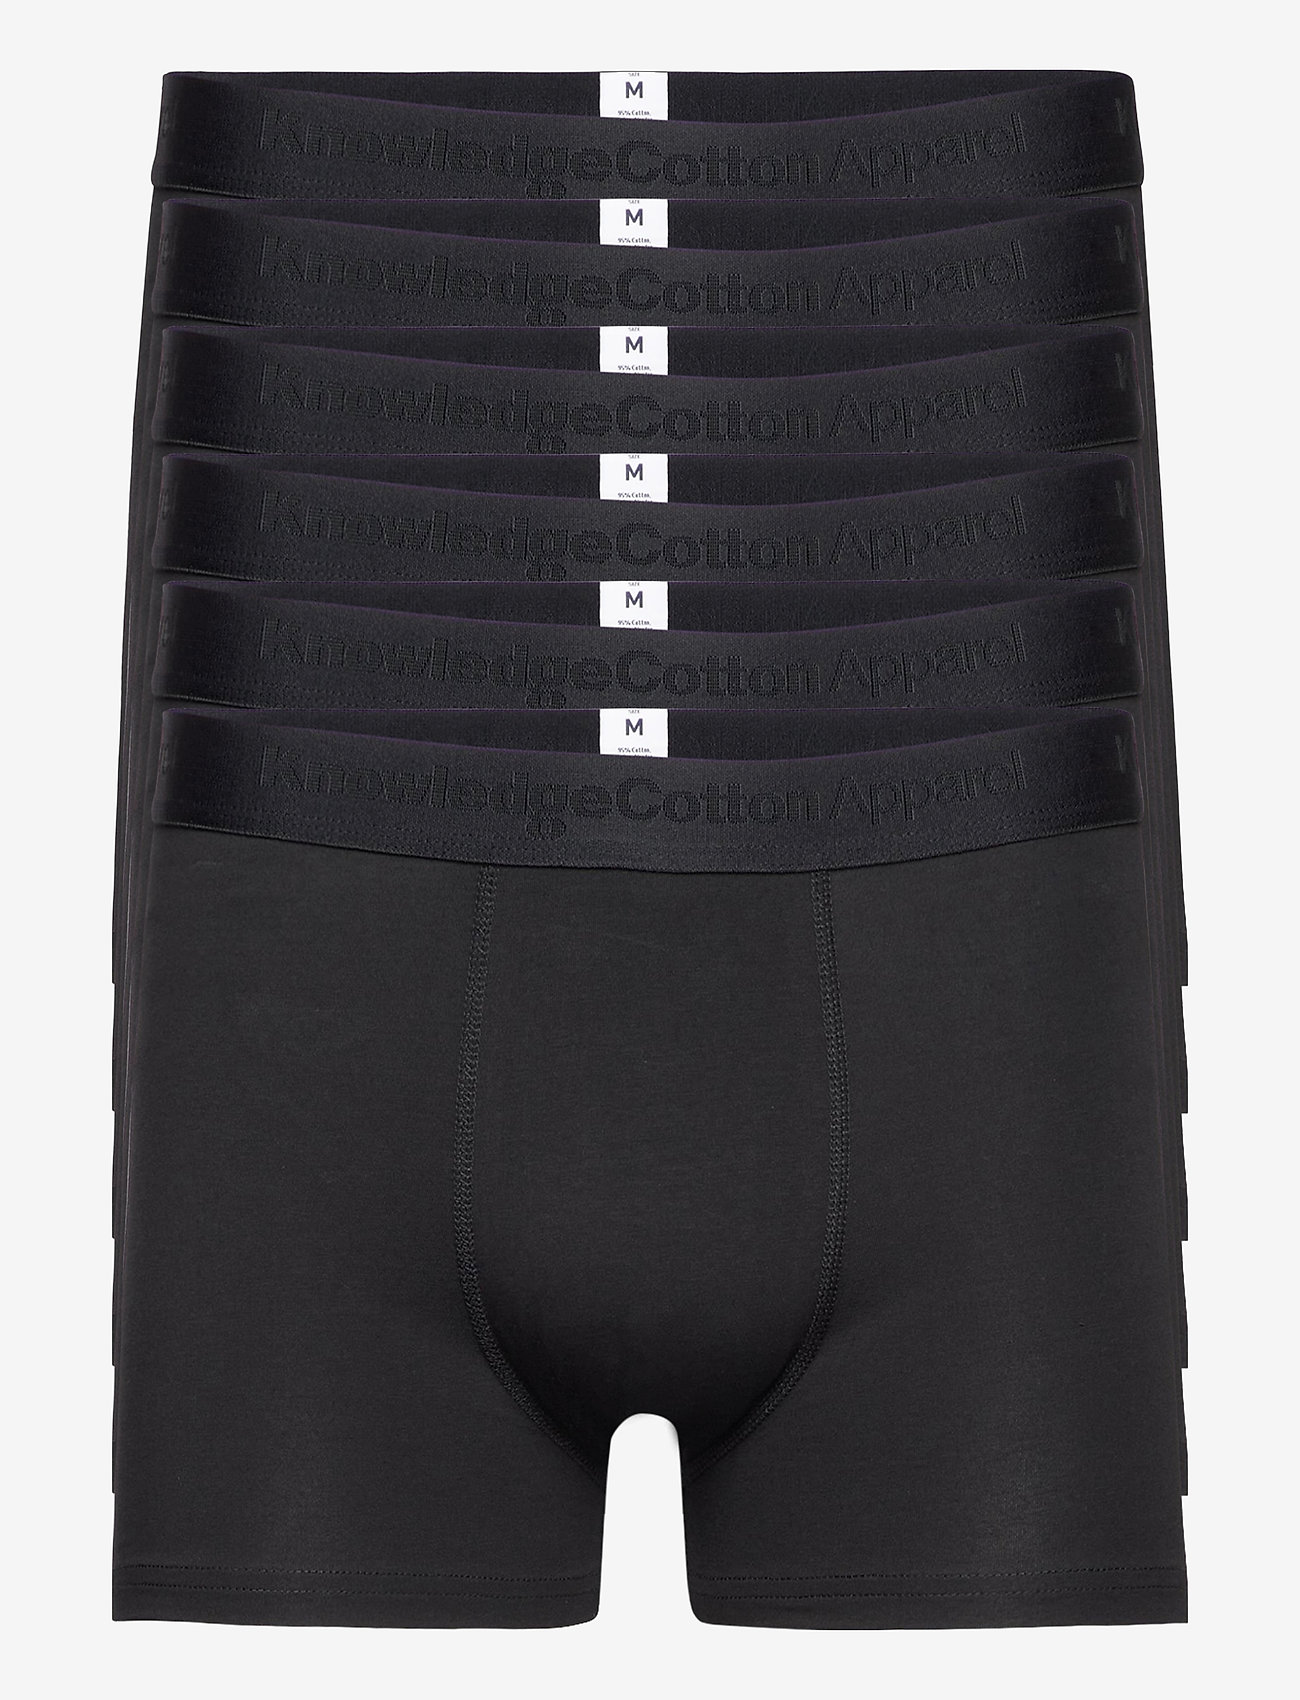 Knowledge Cotton Apparel - MAPLE 6 pack underwear - GOTS/Vegan - multipack underpants - black jet - 0